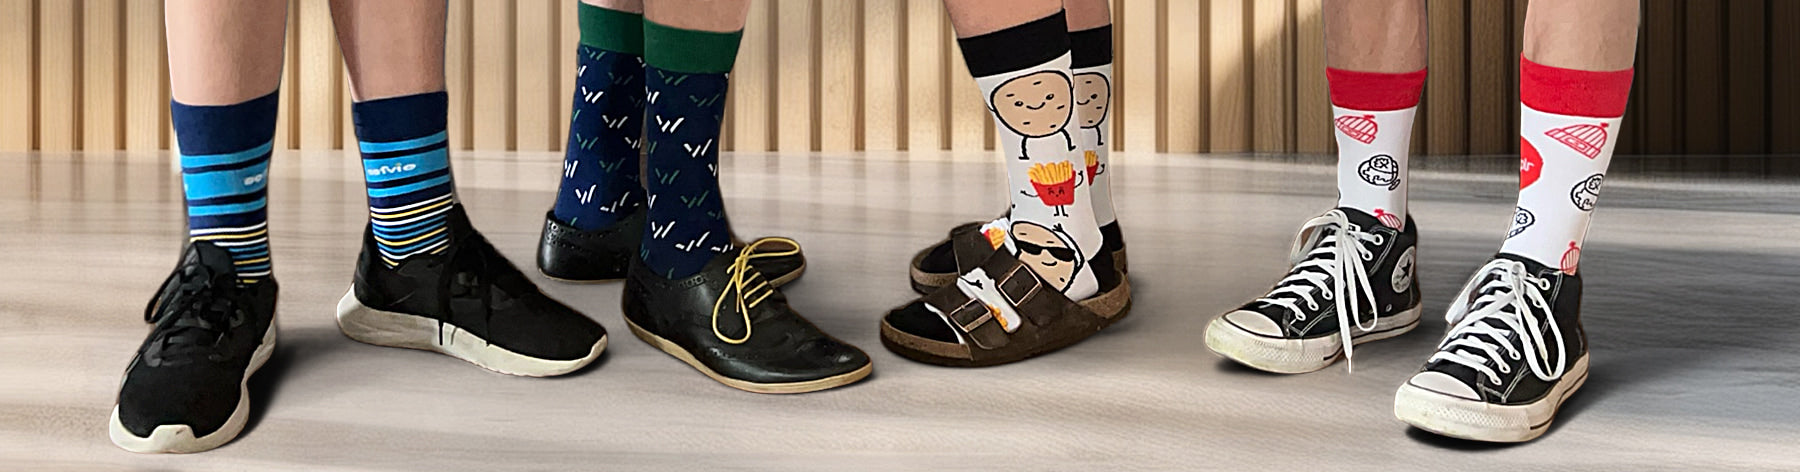 custom branded socks by sock rocket